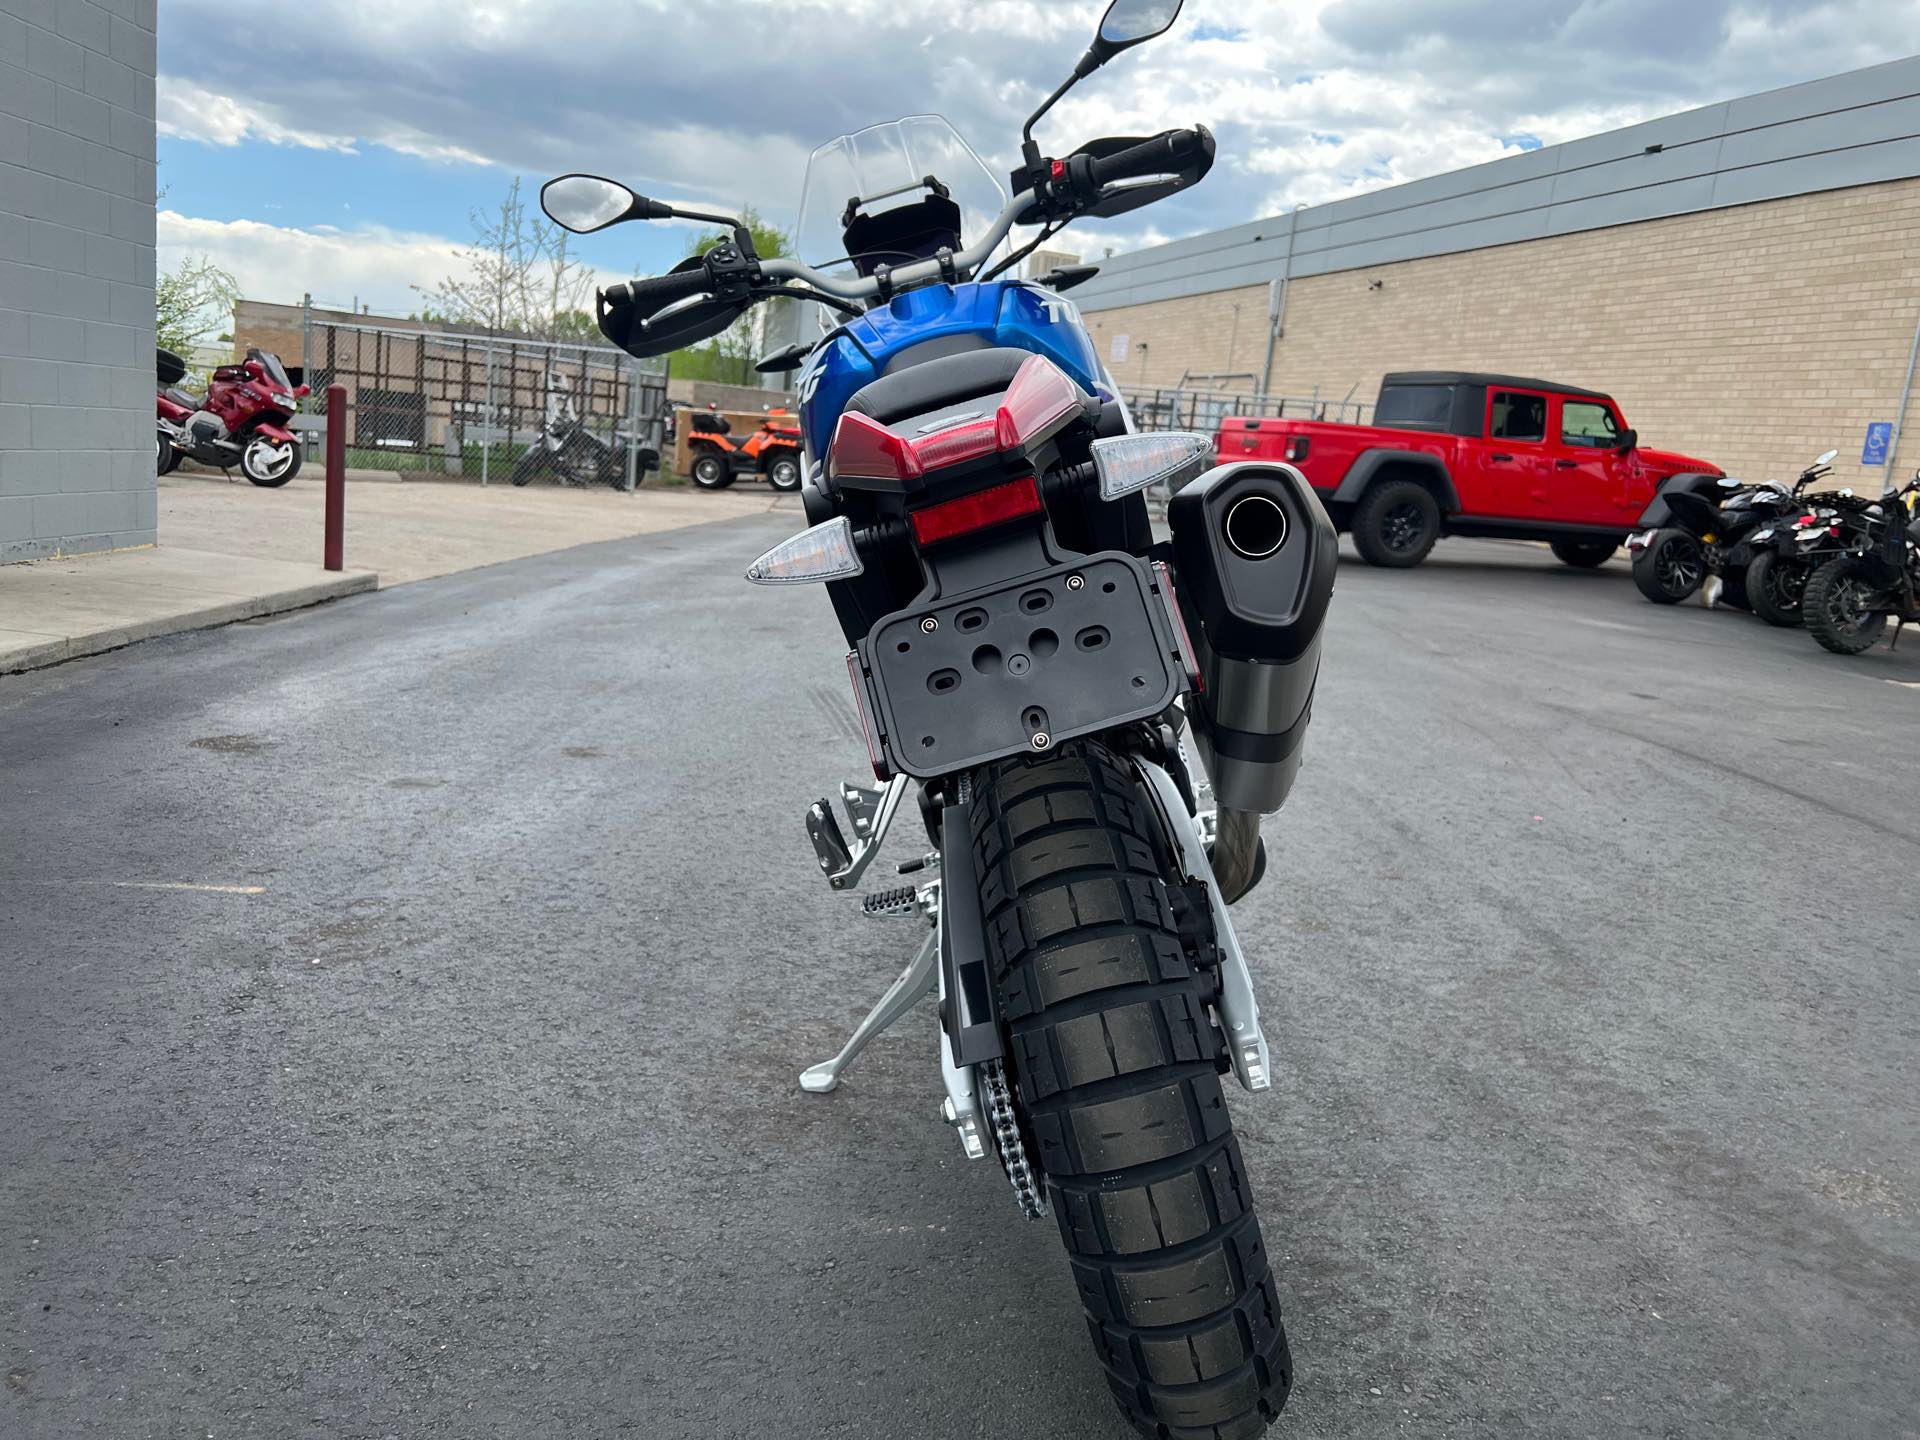 2023 Aprilia Tuareg 660 at Aces Motorcycles - Fort Collins